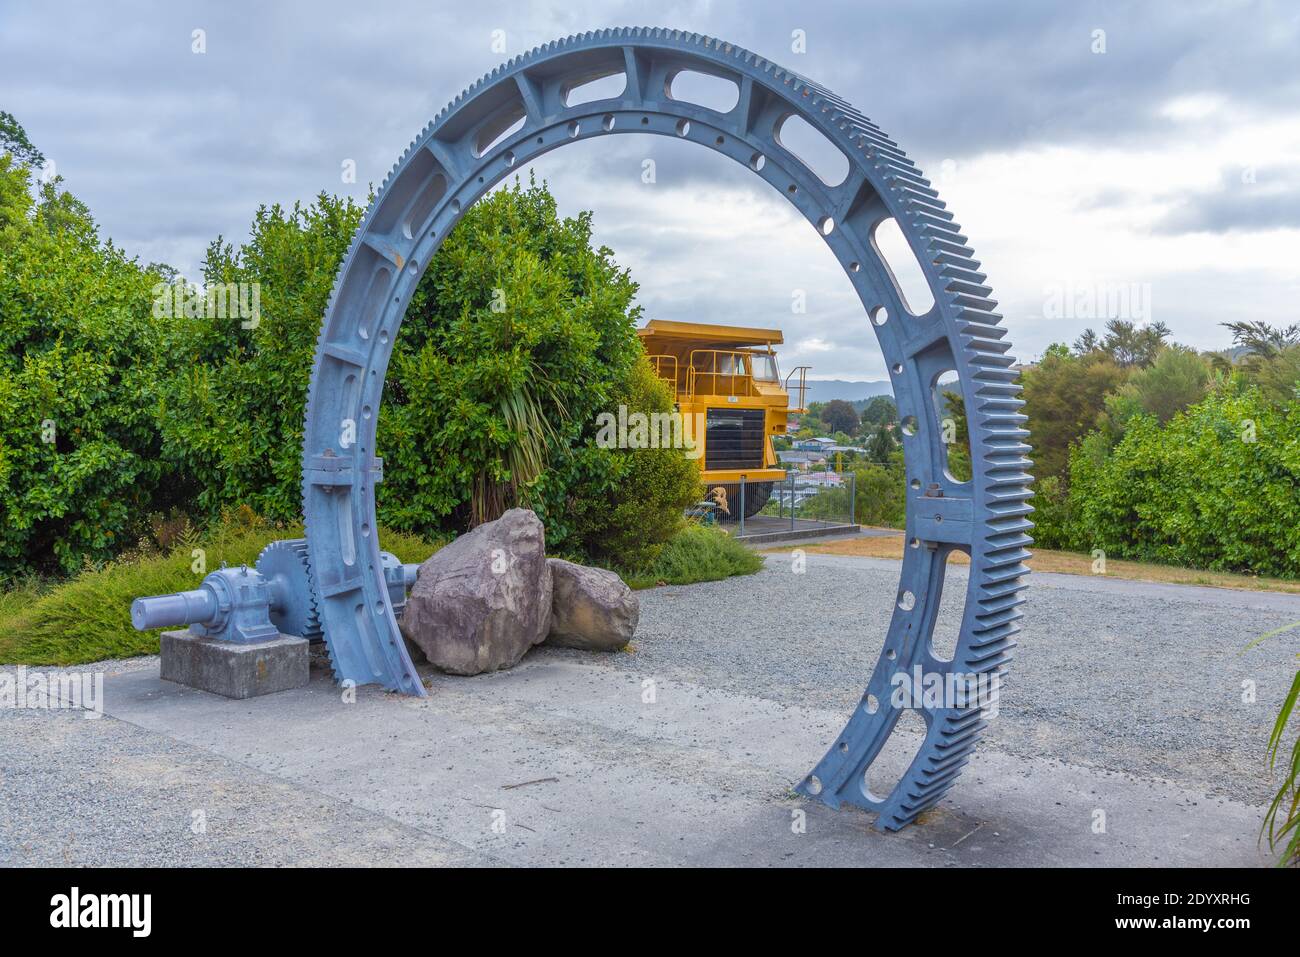 Mining equipment displayed at Martha gold mine at Waihi, New Zealand Stock Photo